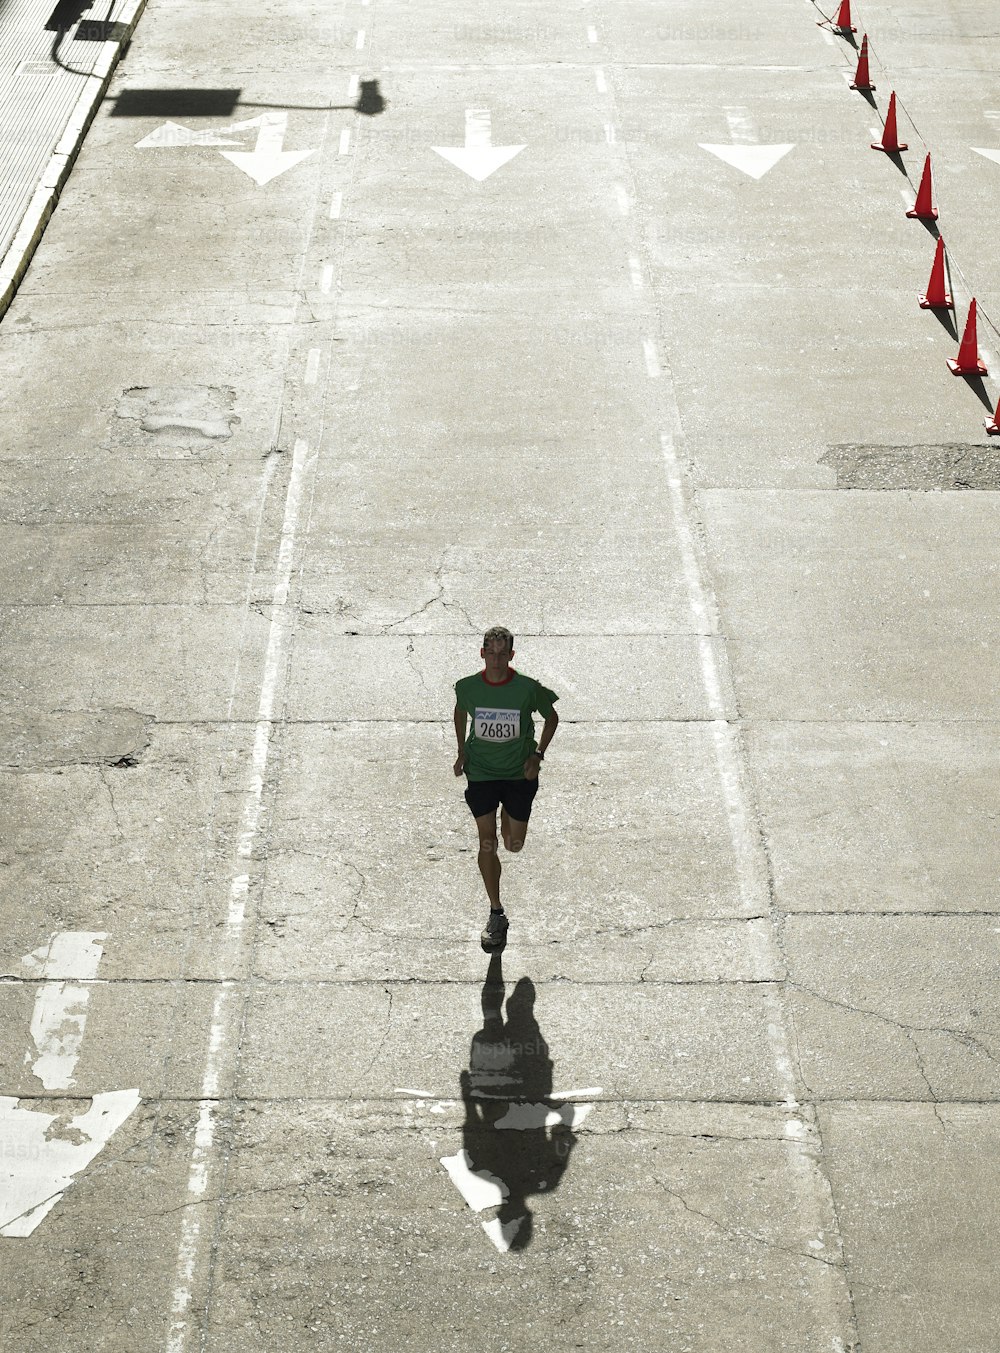 a man running down a street with a green shirt on